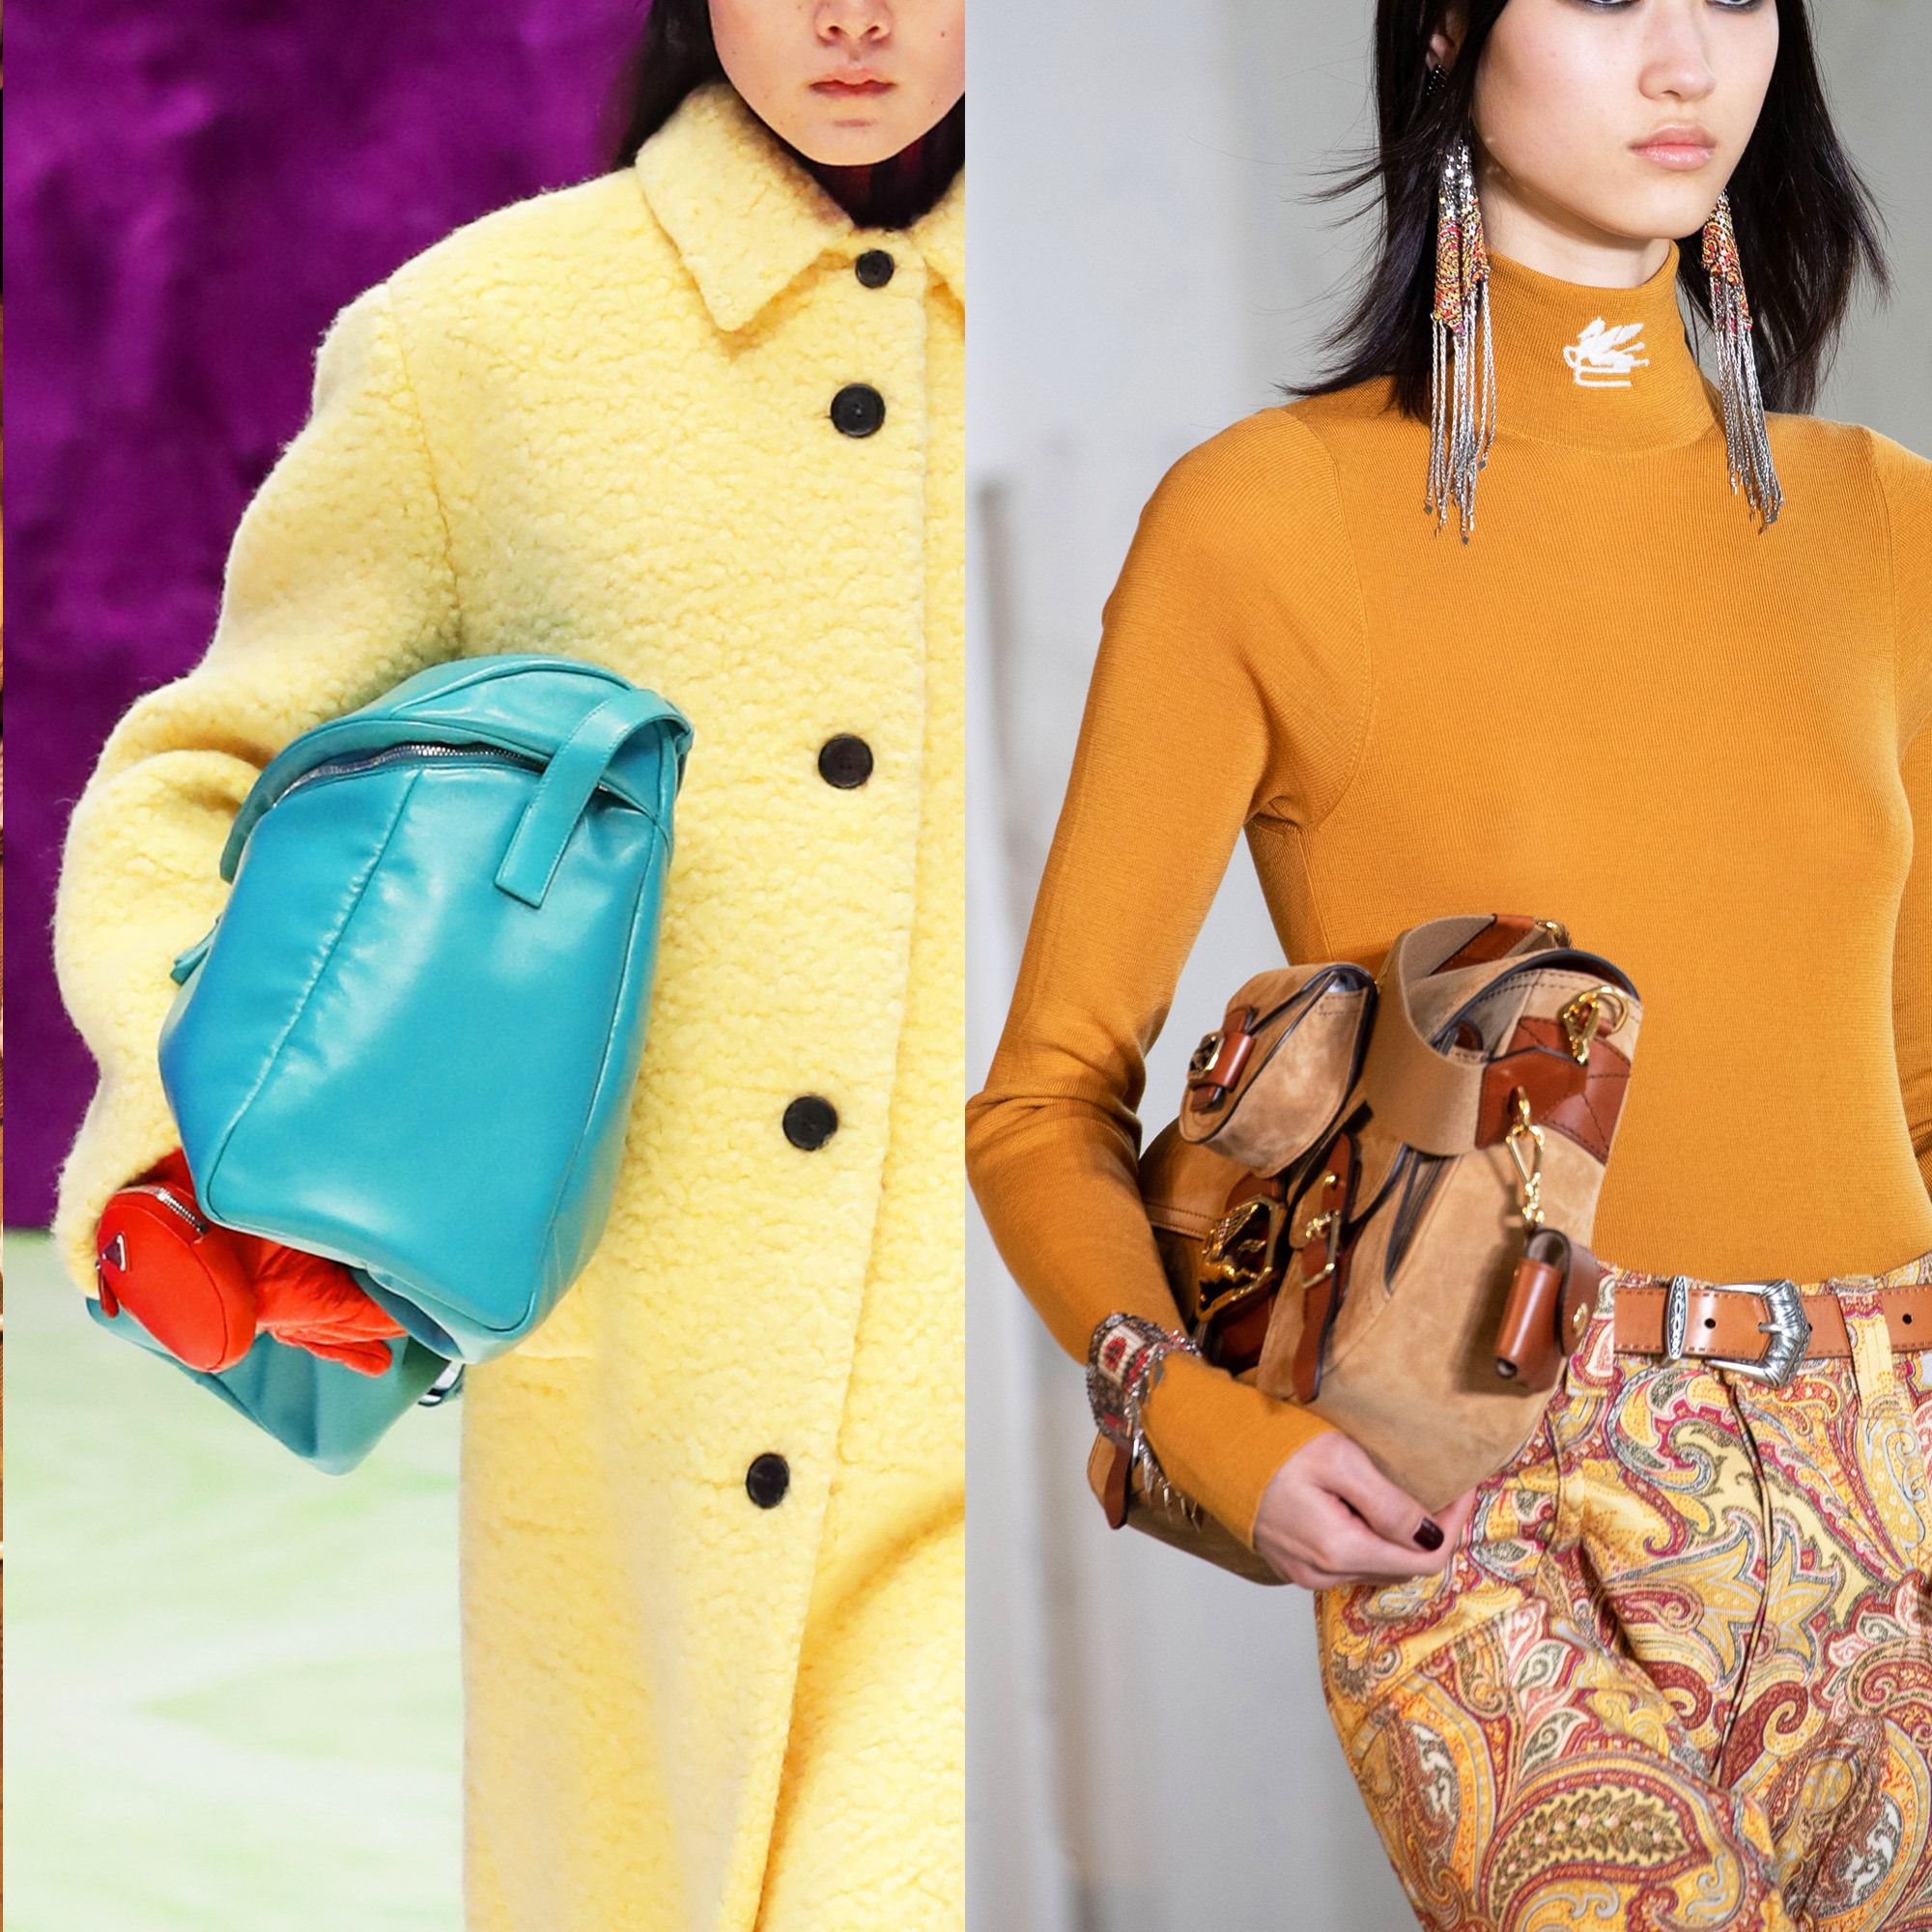 The hottest designer handbags for autumn 2021 – from Jennifer